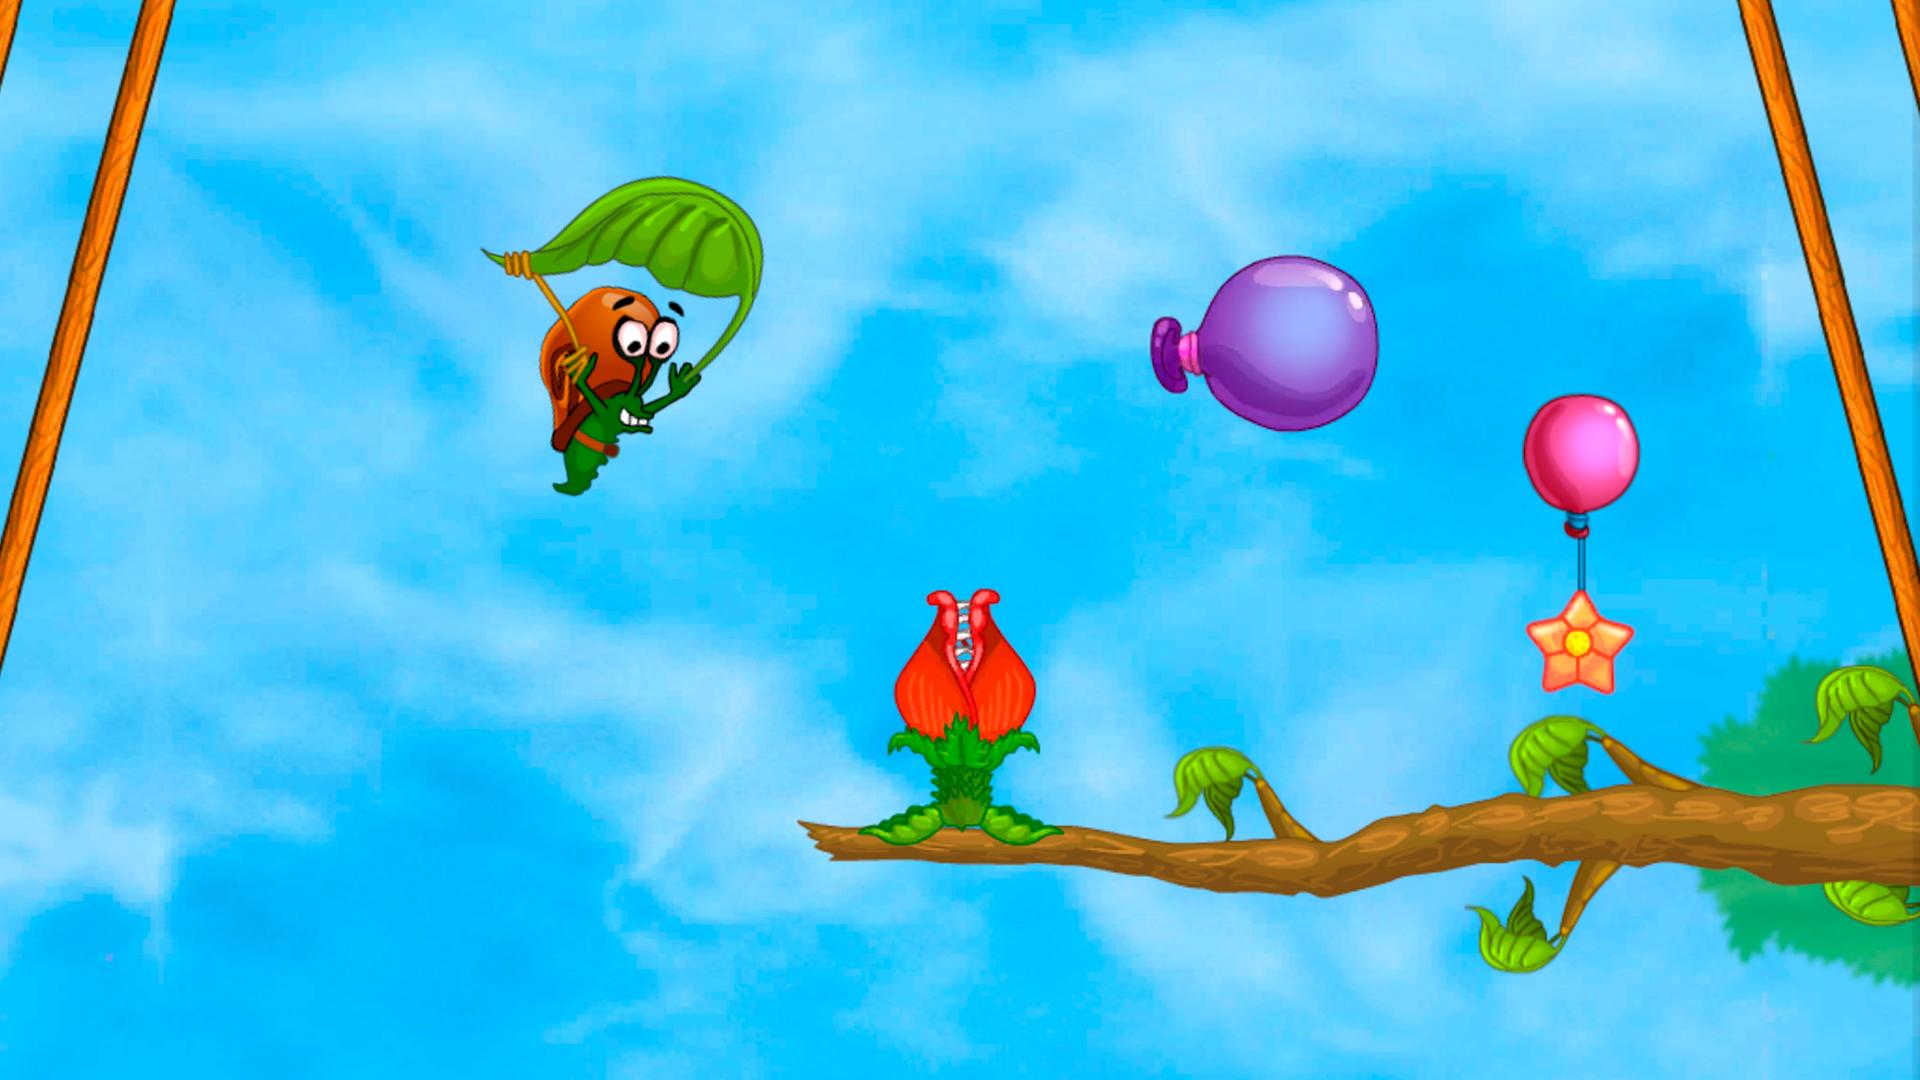 Snail Bob 1: Arcade Adventure In The Puzzle World 0.8.4 Screenshot 16